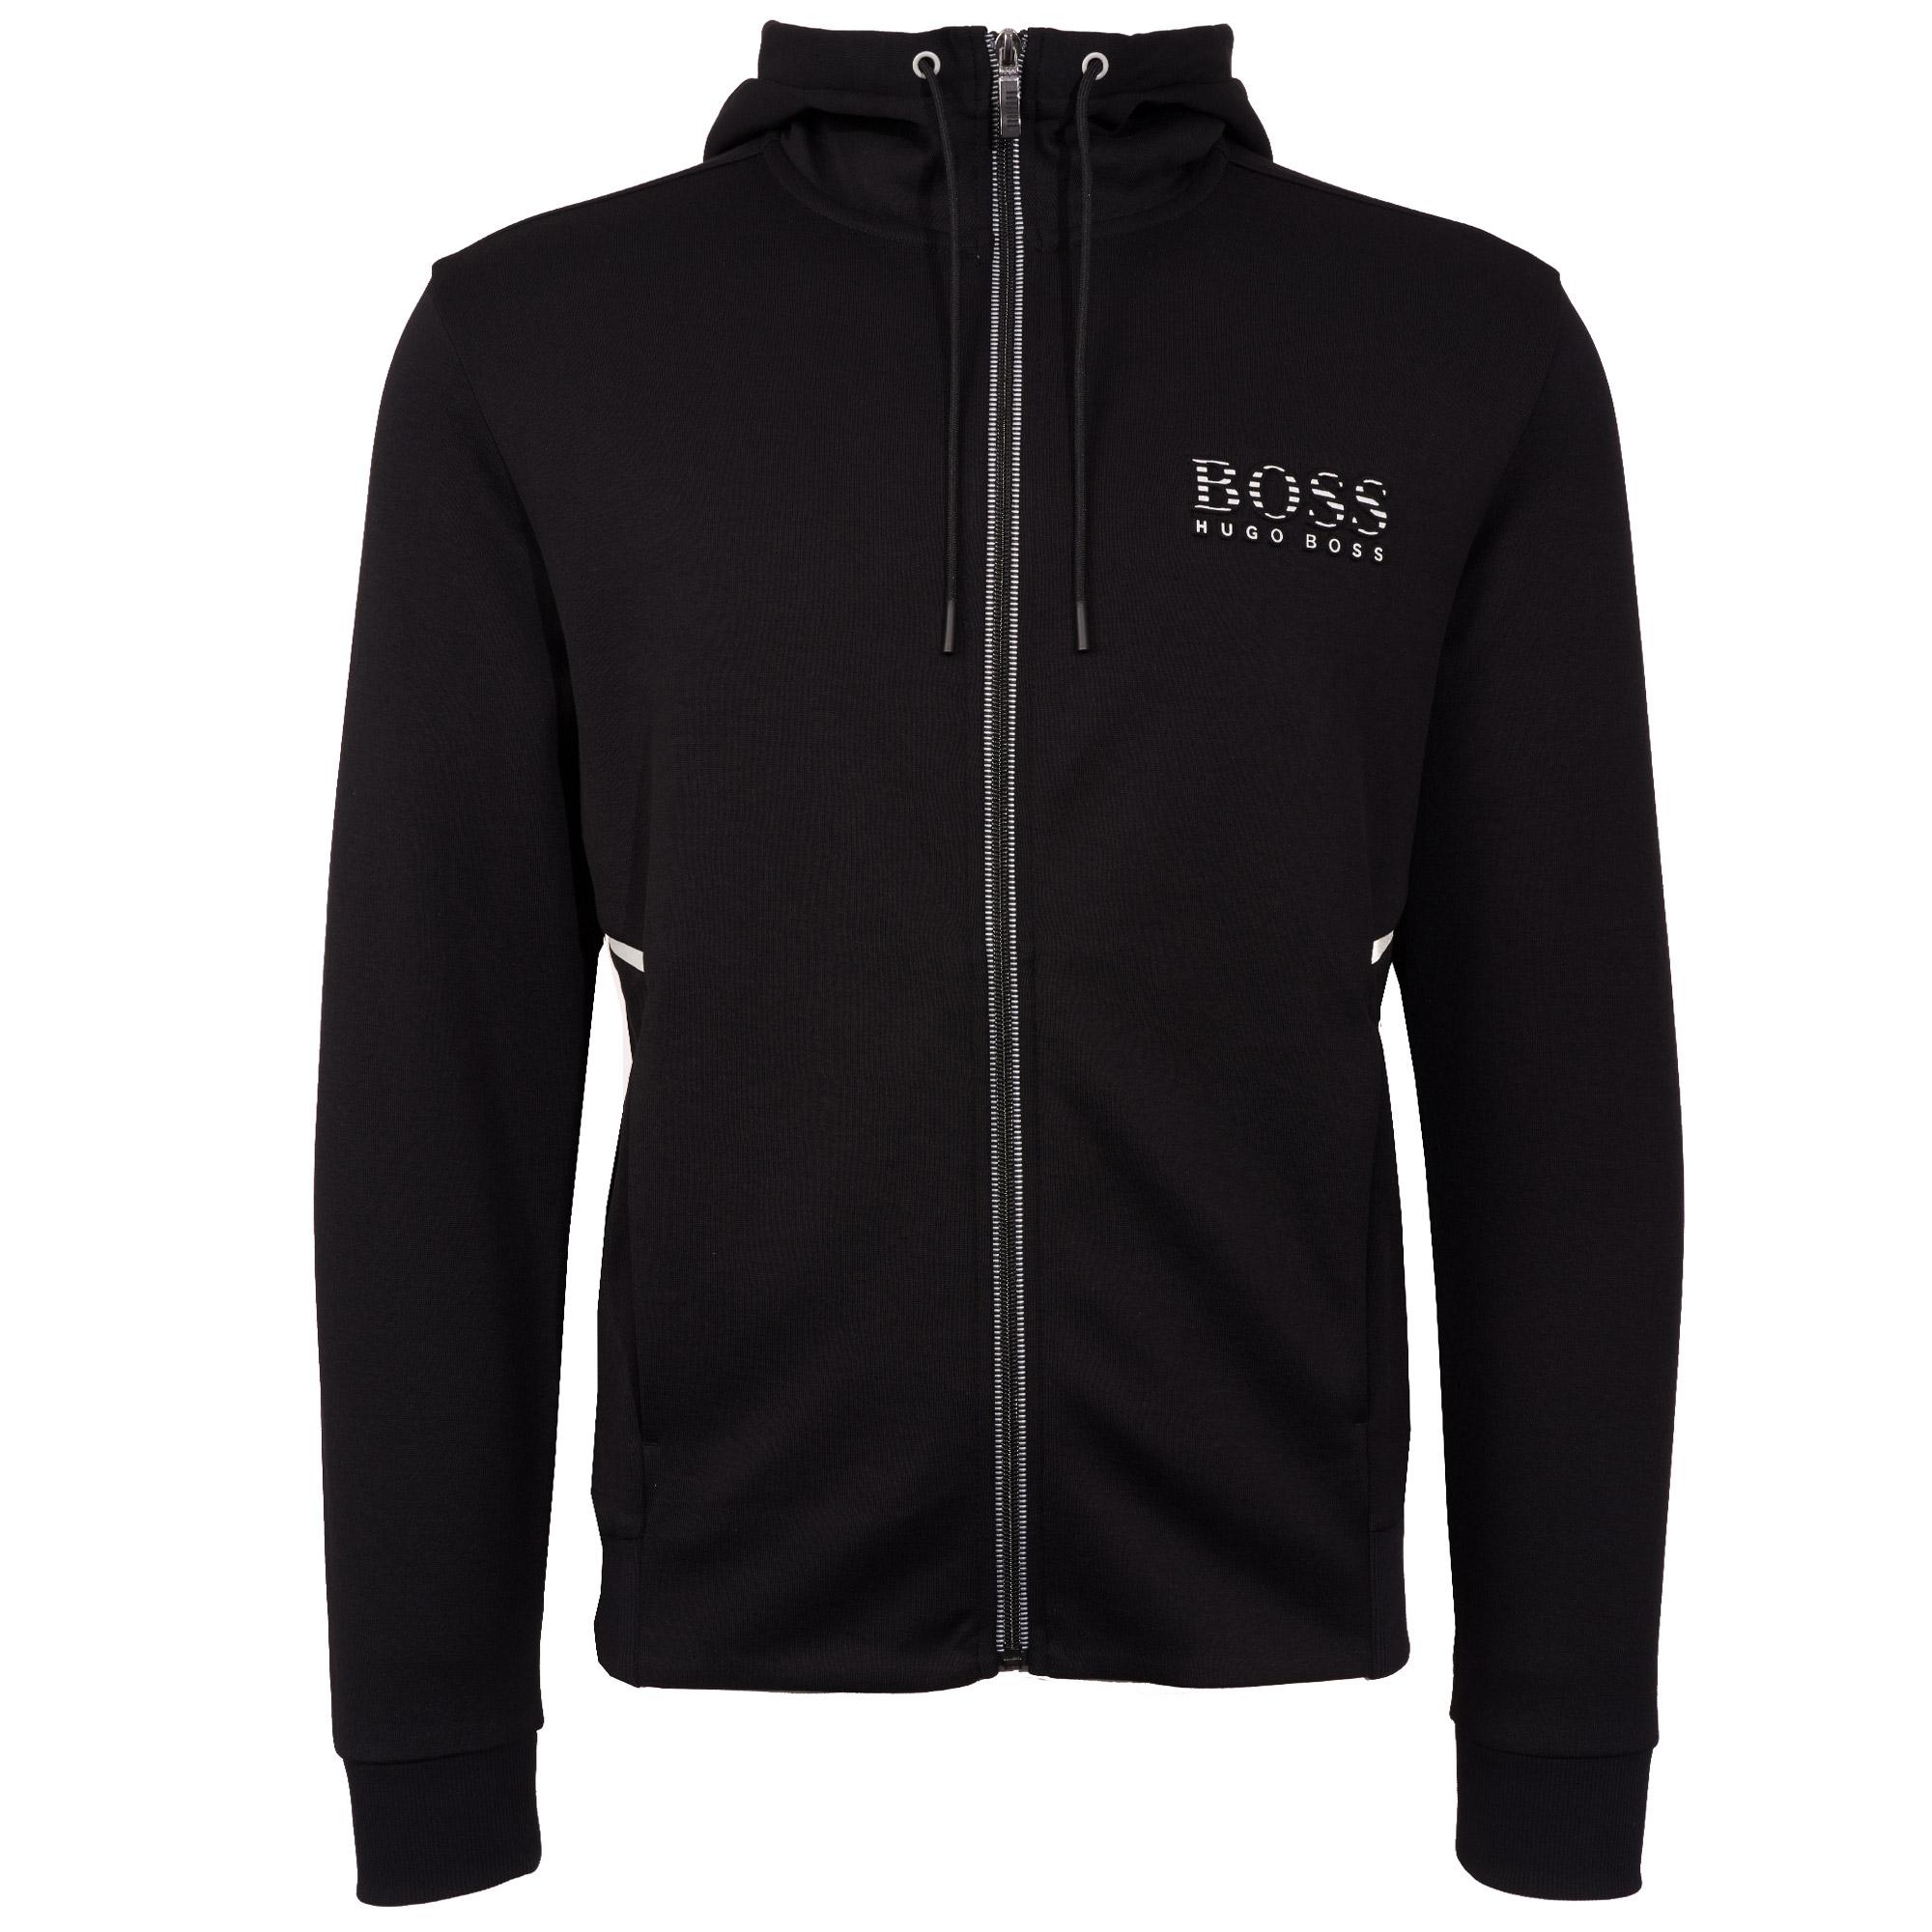 Lyst - BOSS Saggy Sweatshirt - Black in Black for Men